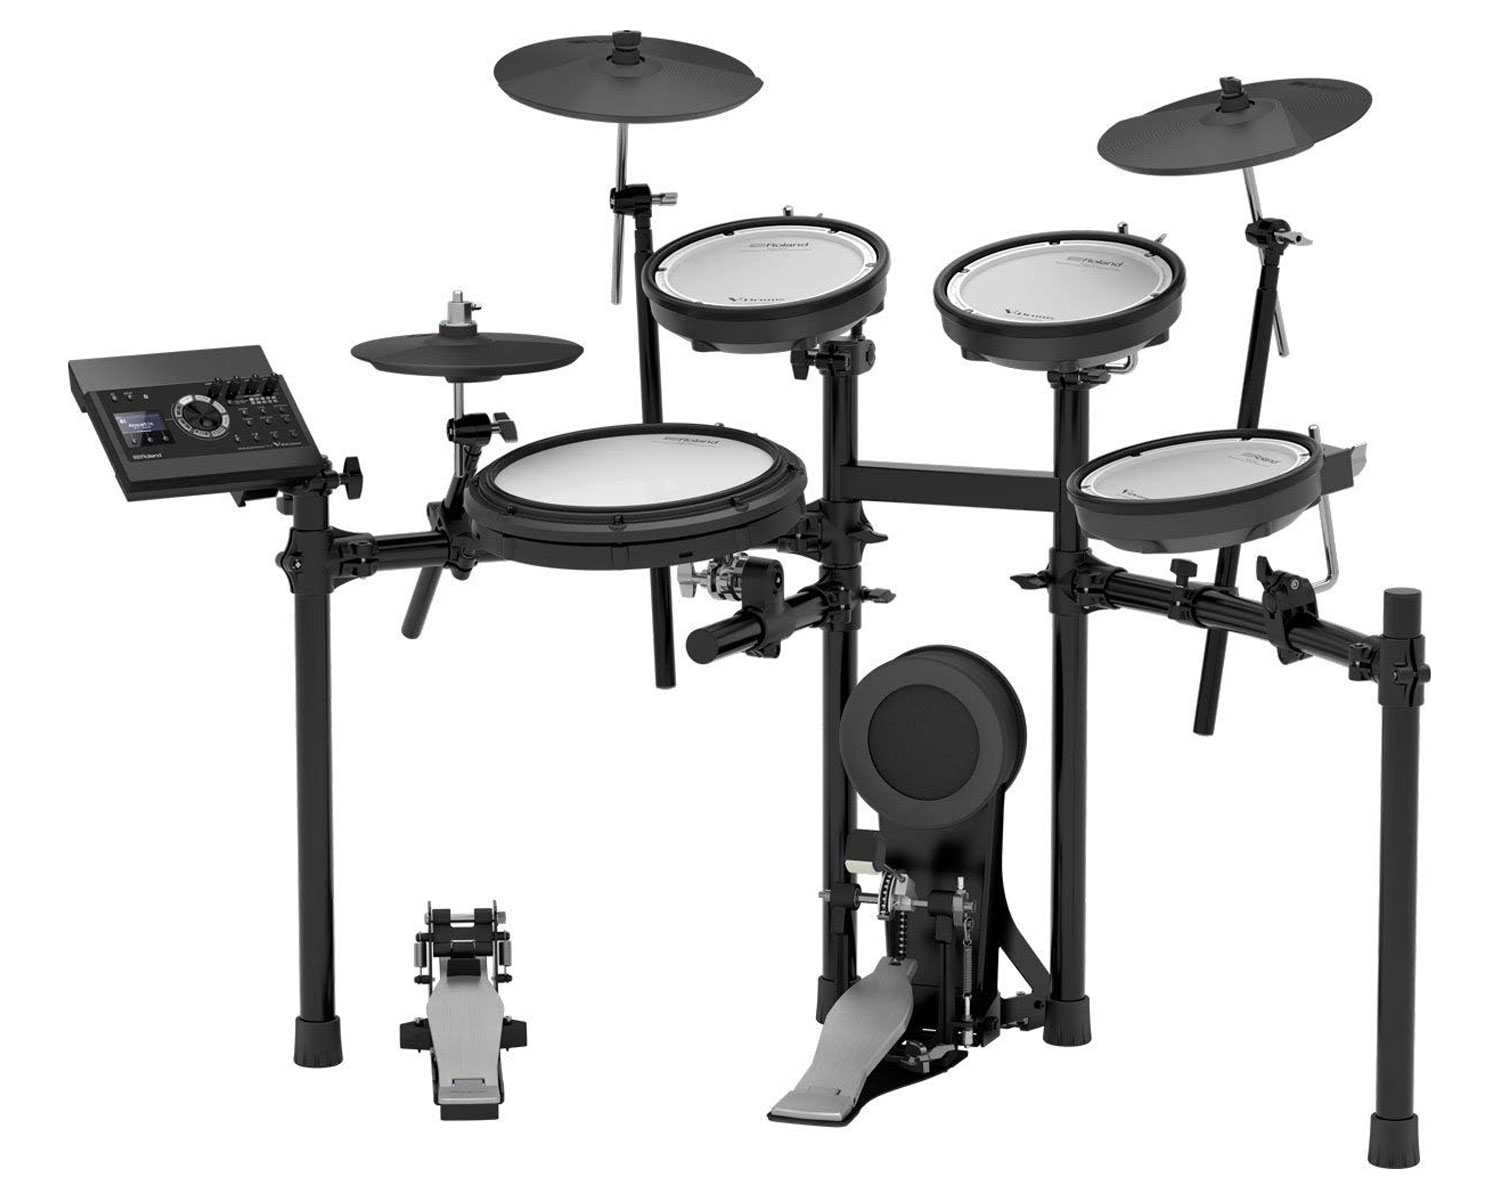 Review: Roland TD-17KV Electronic Drum Kit